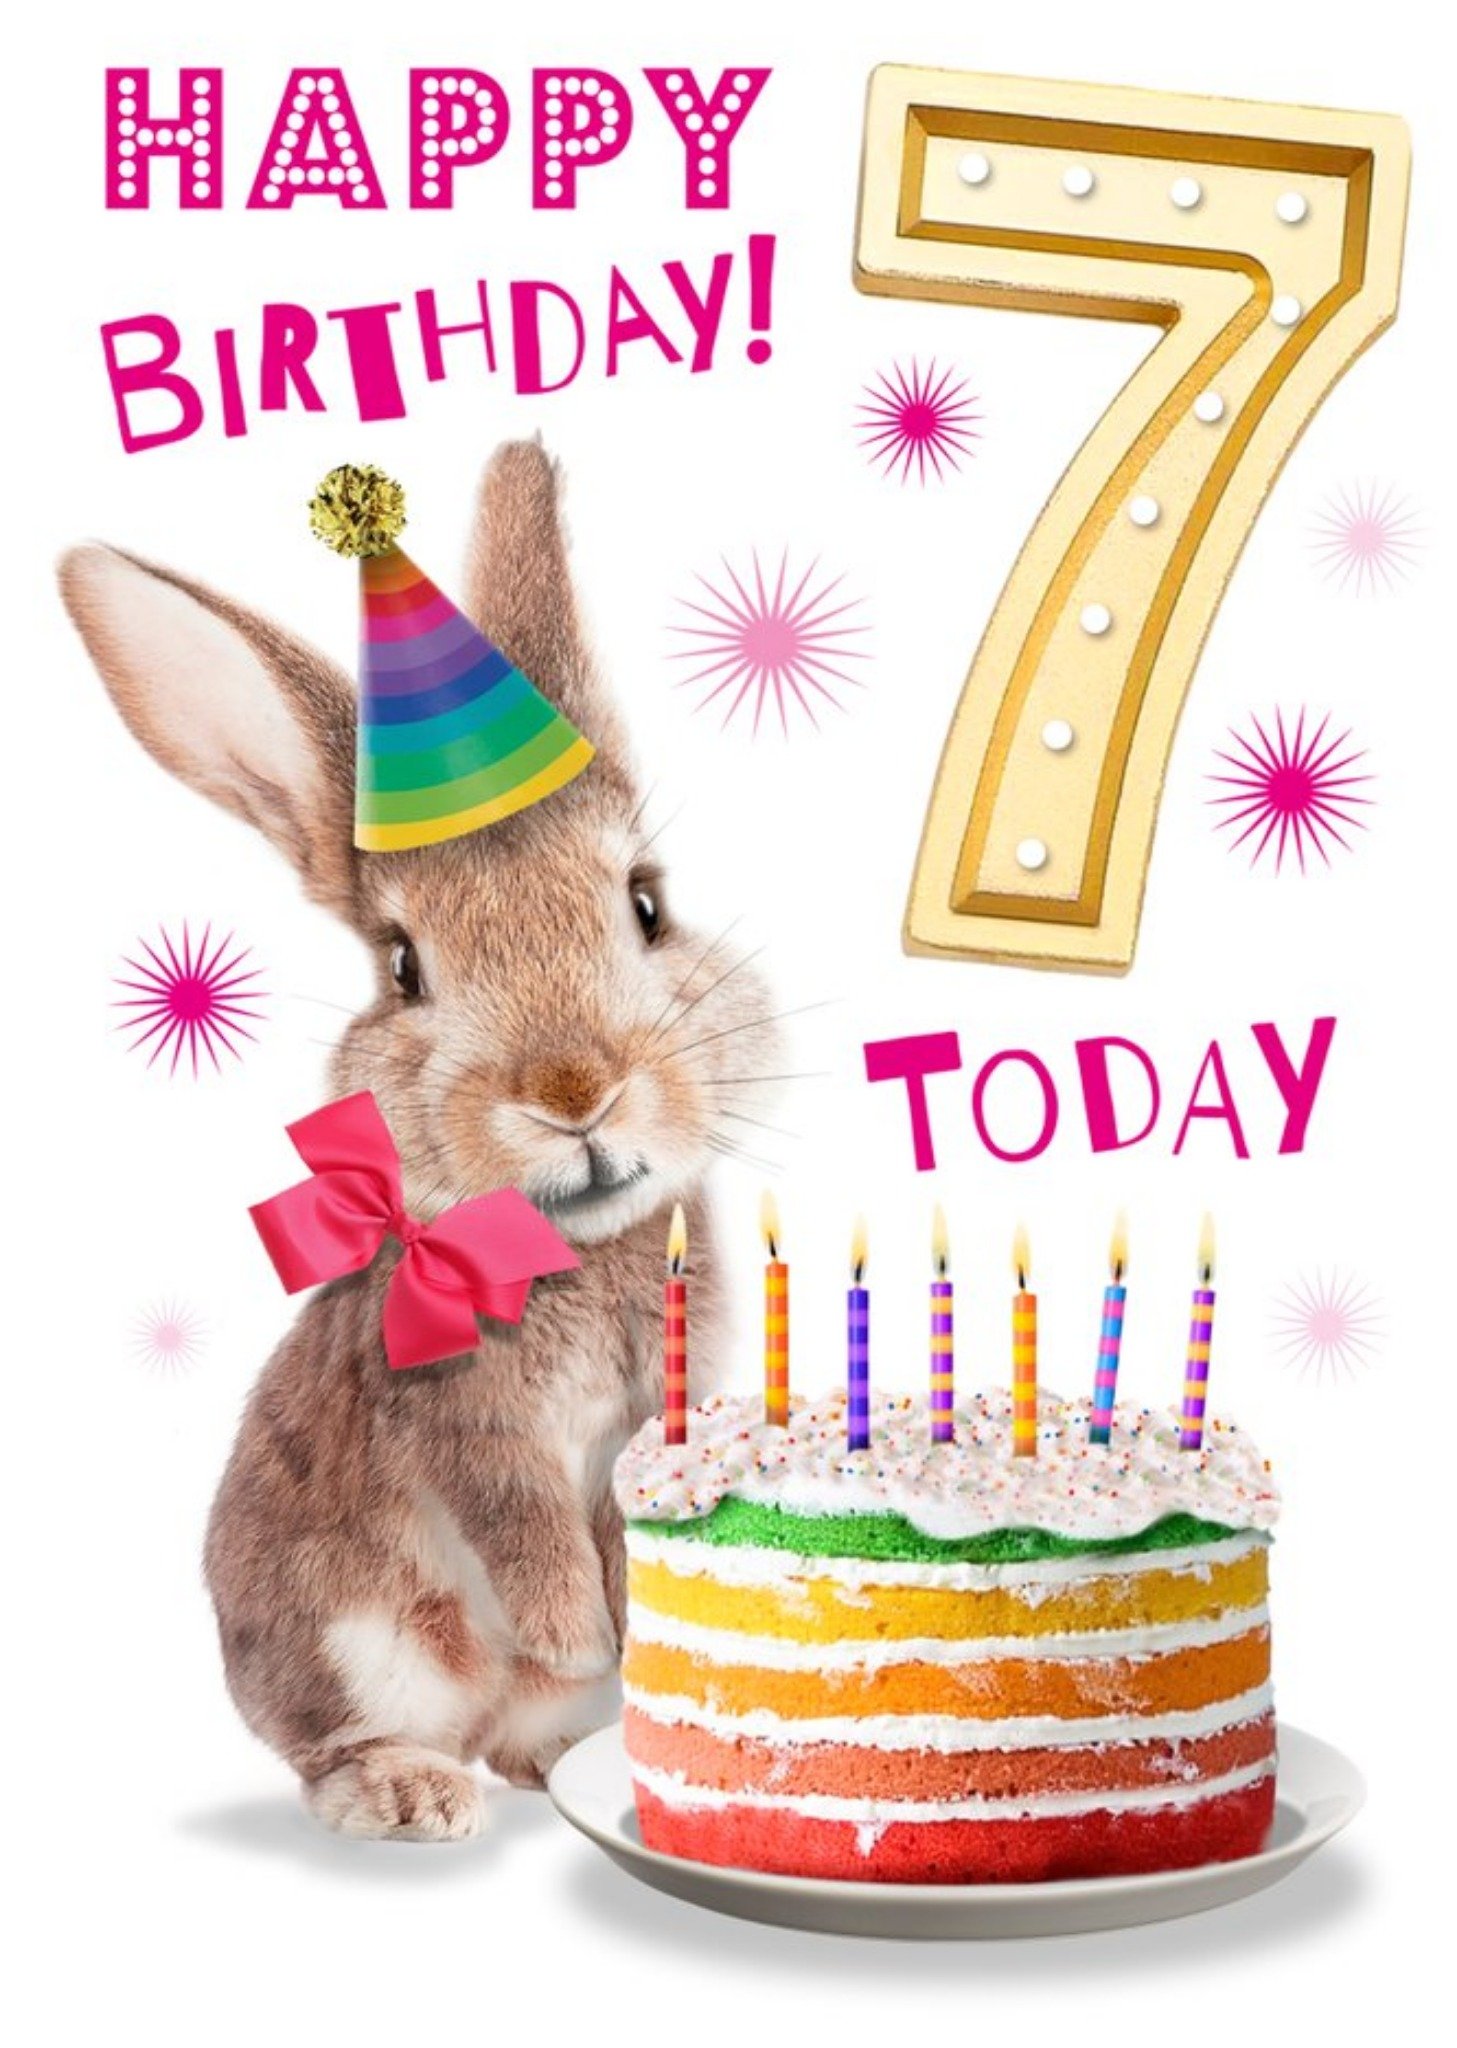 Moonpig Cute Rabbit With Cake 7th Birthday Card Ecard